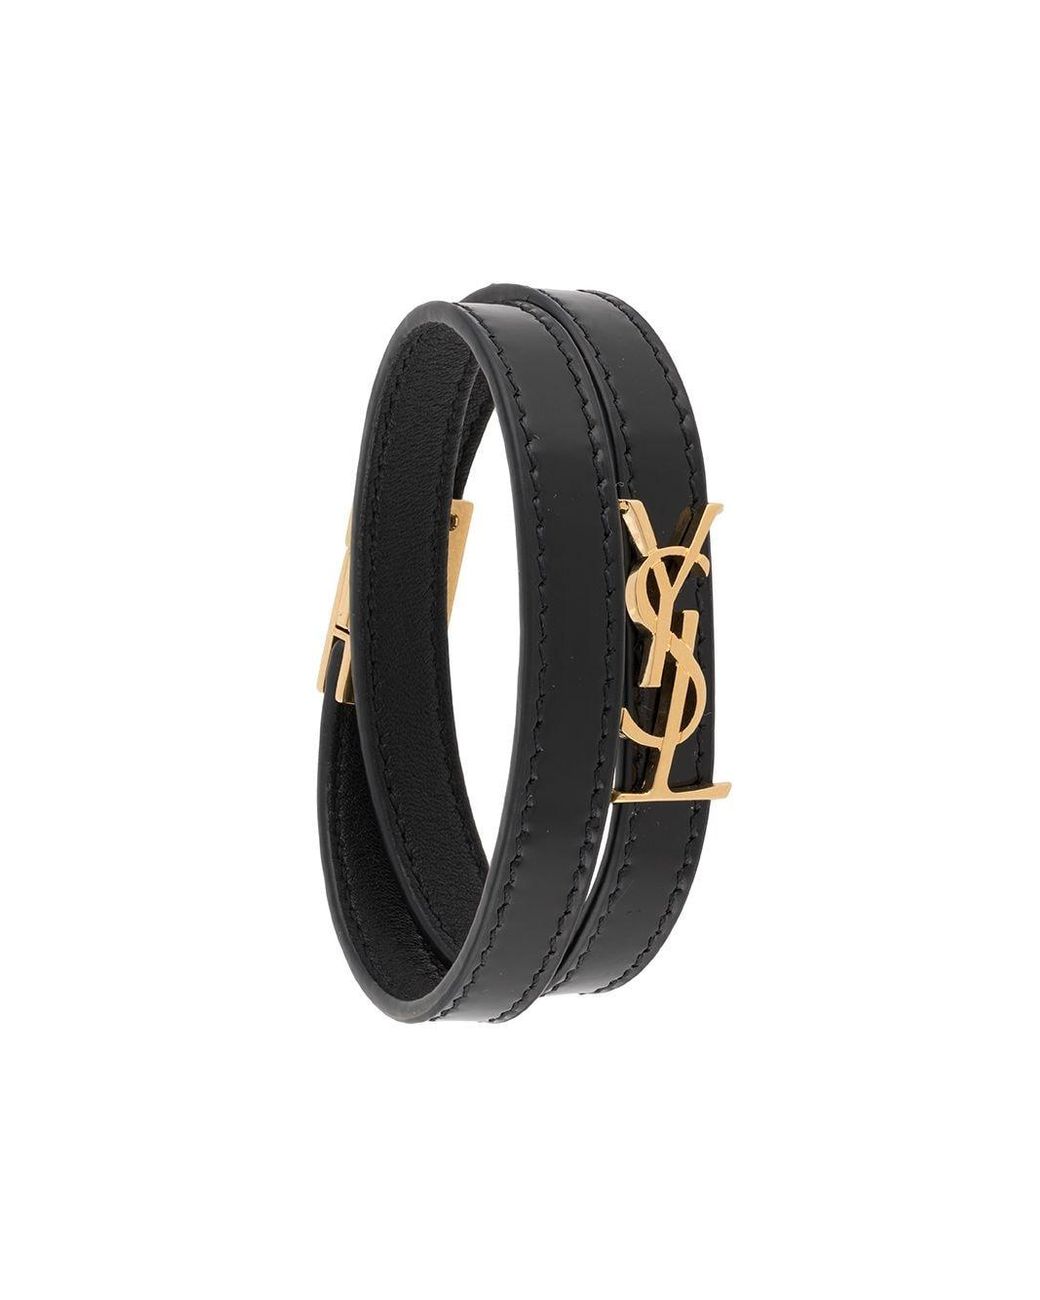 Saint Laurent Monogram Double-wrap Leather Bracelet in Black for Men - Lyst